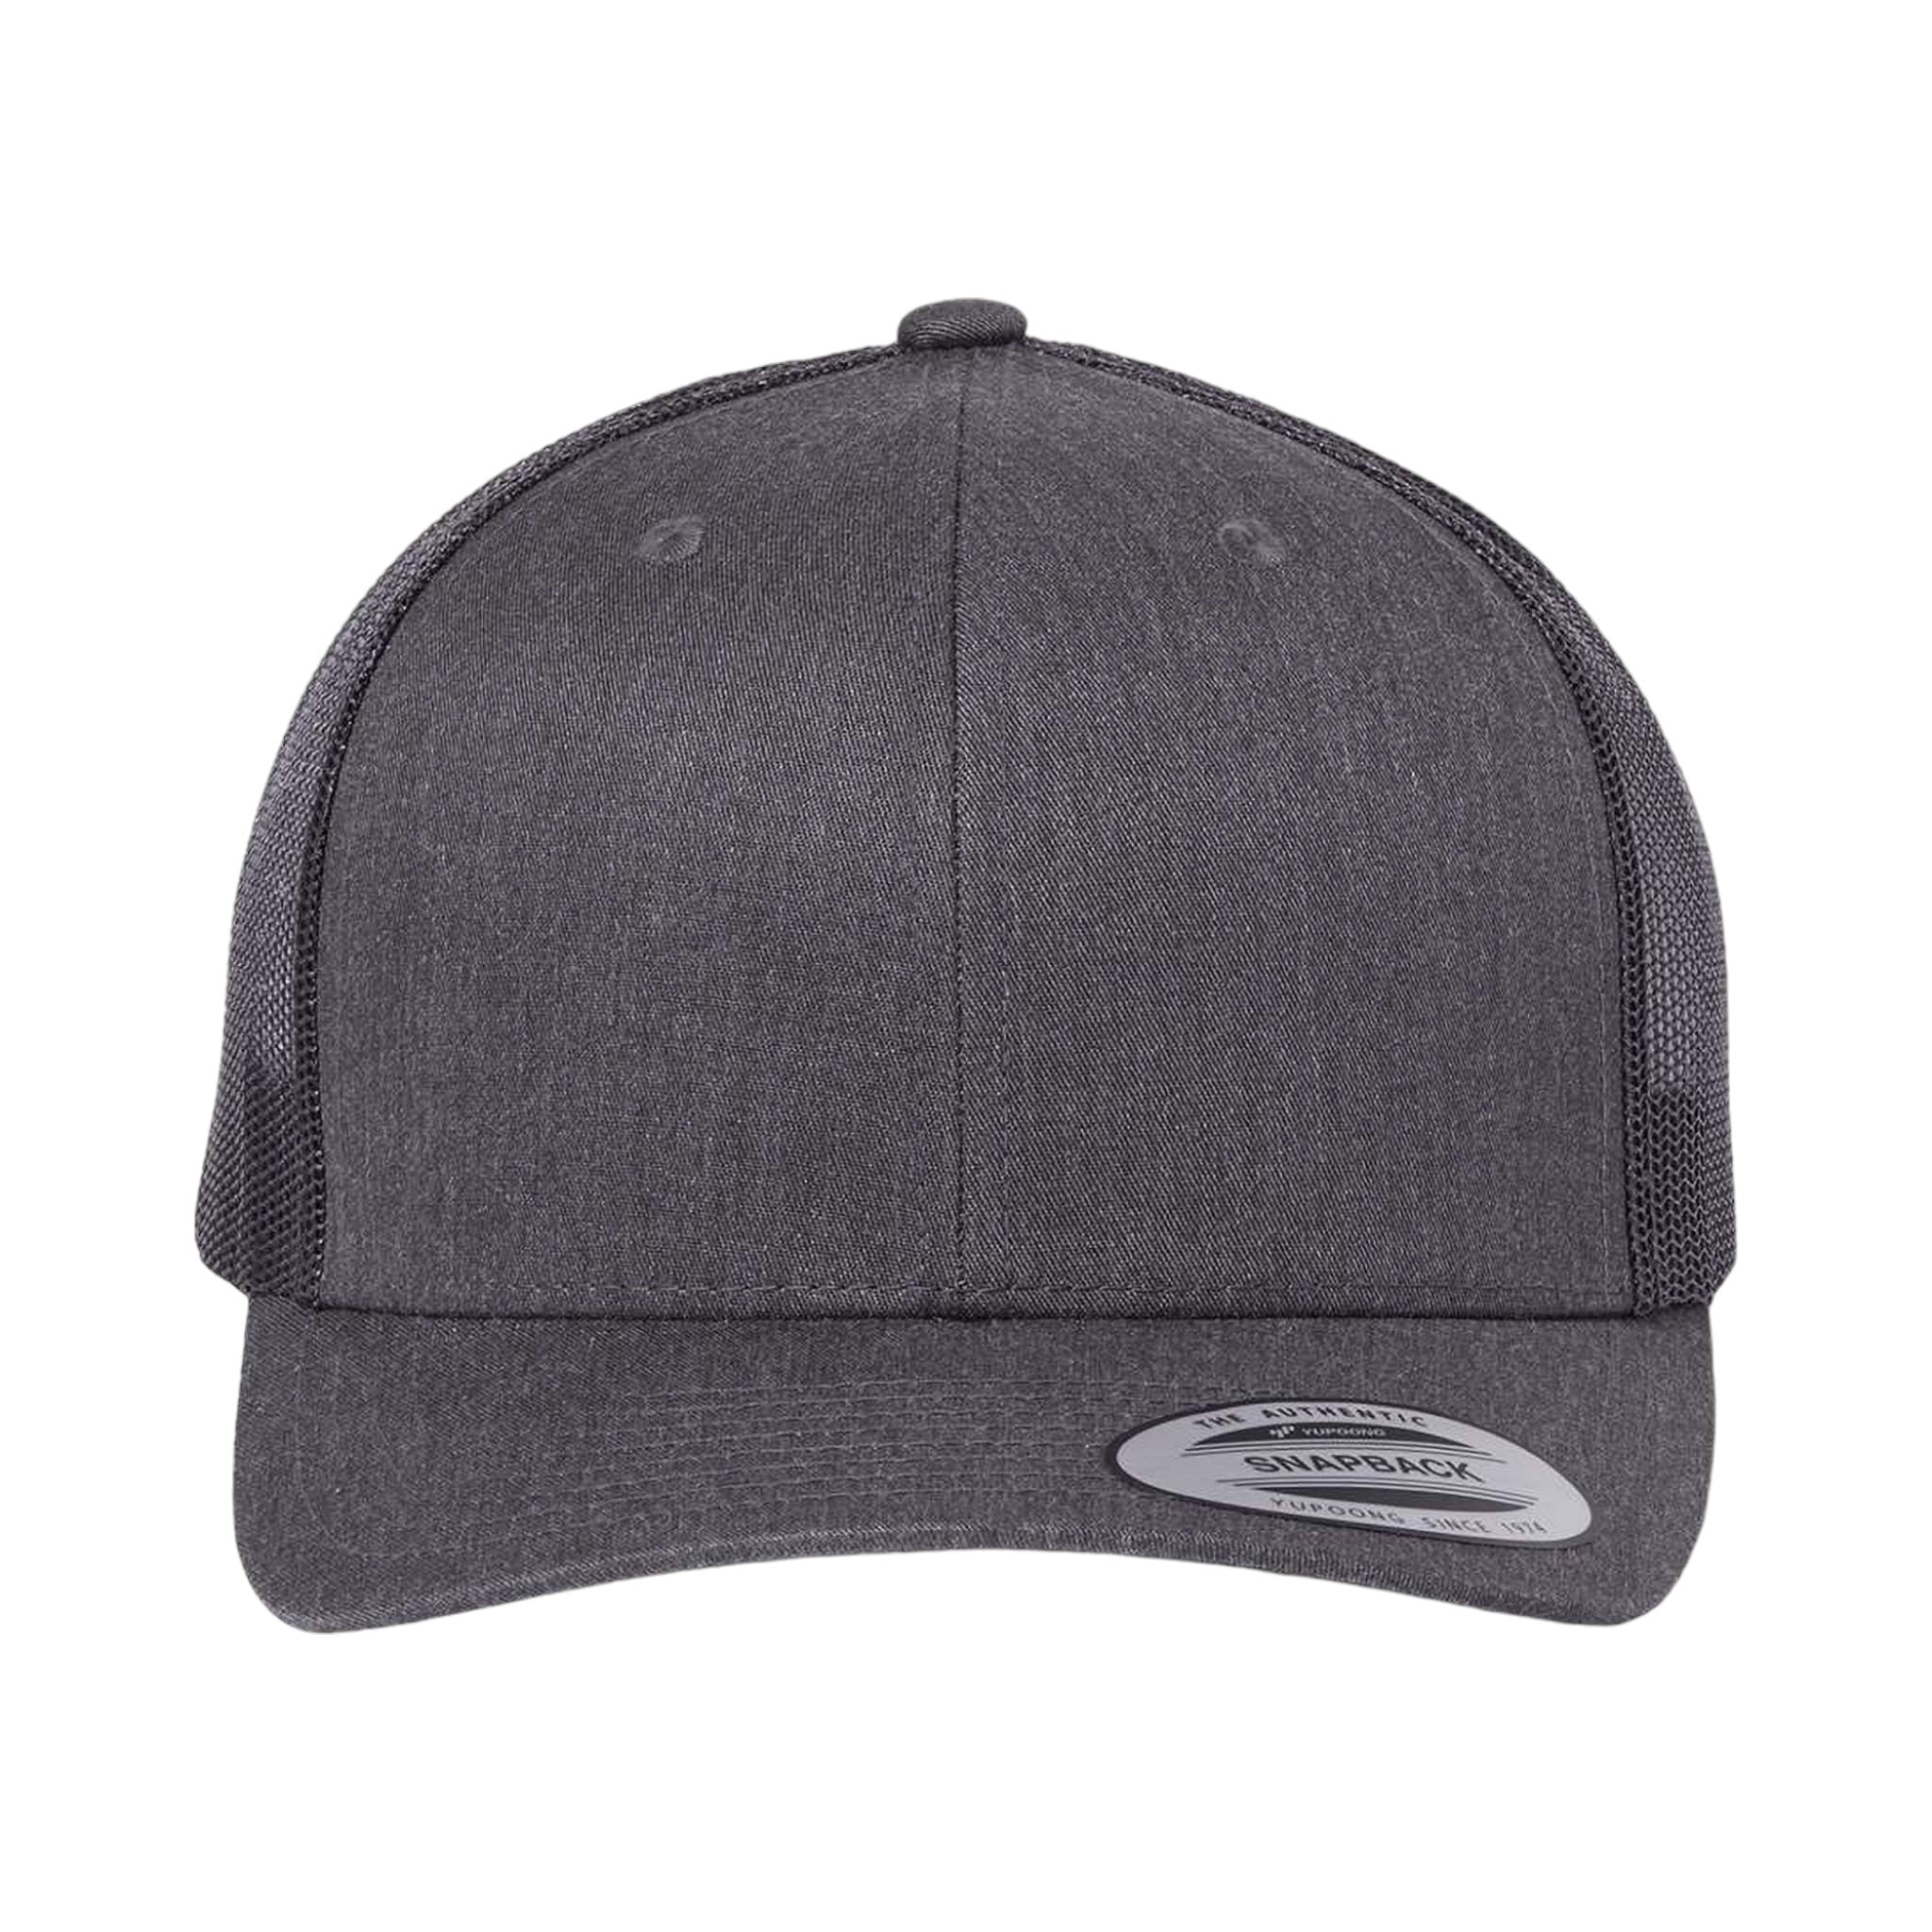 Front view of YP Classics 6606 custom hat in dark heather grey